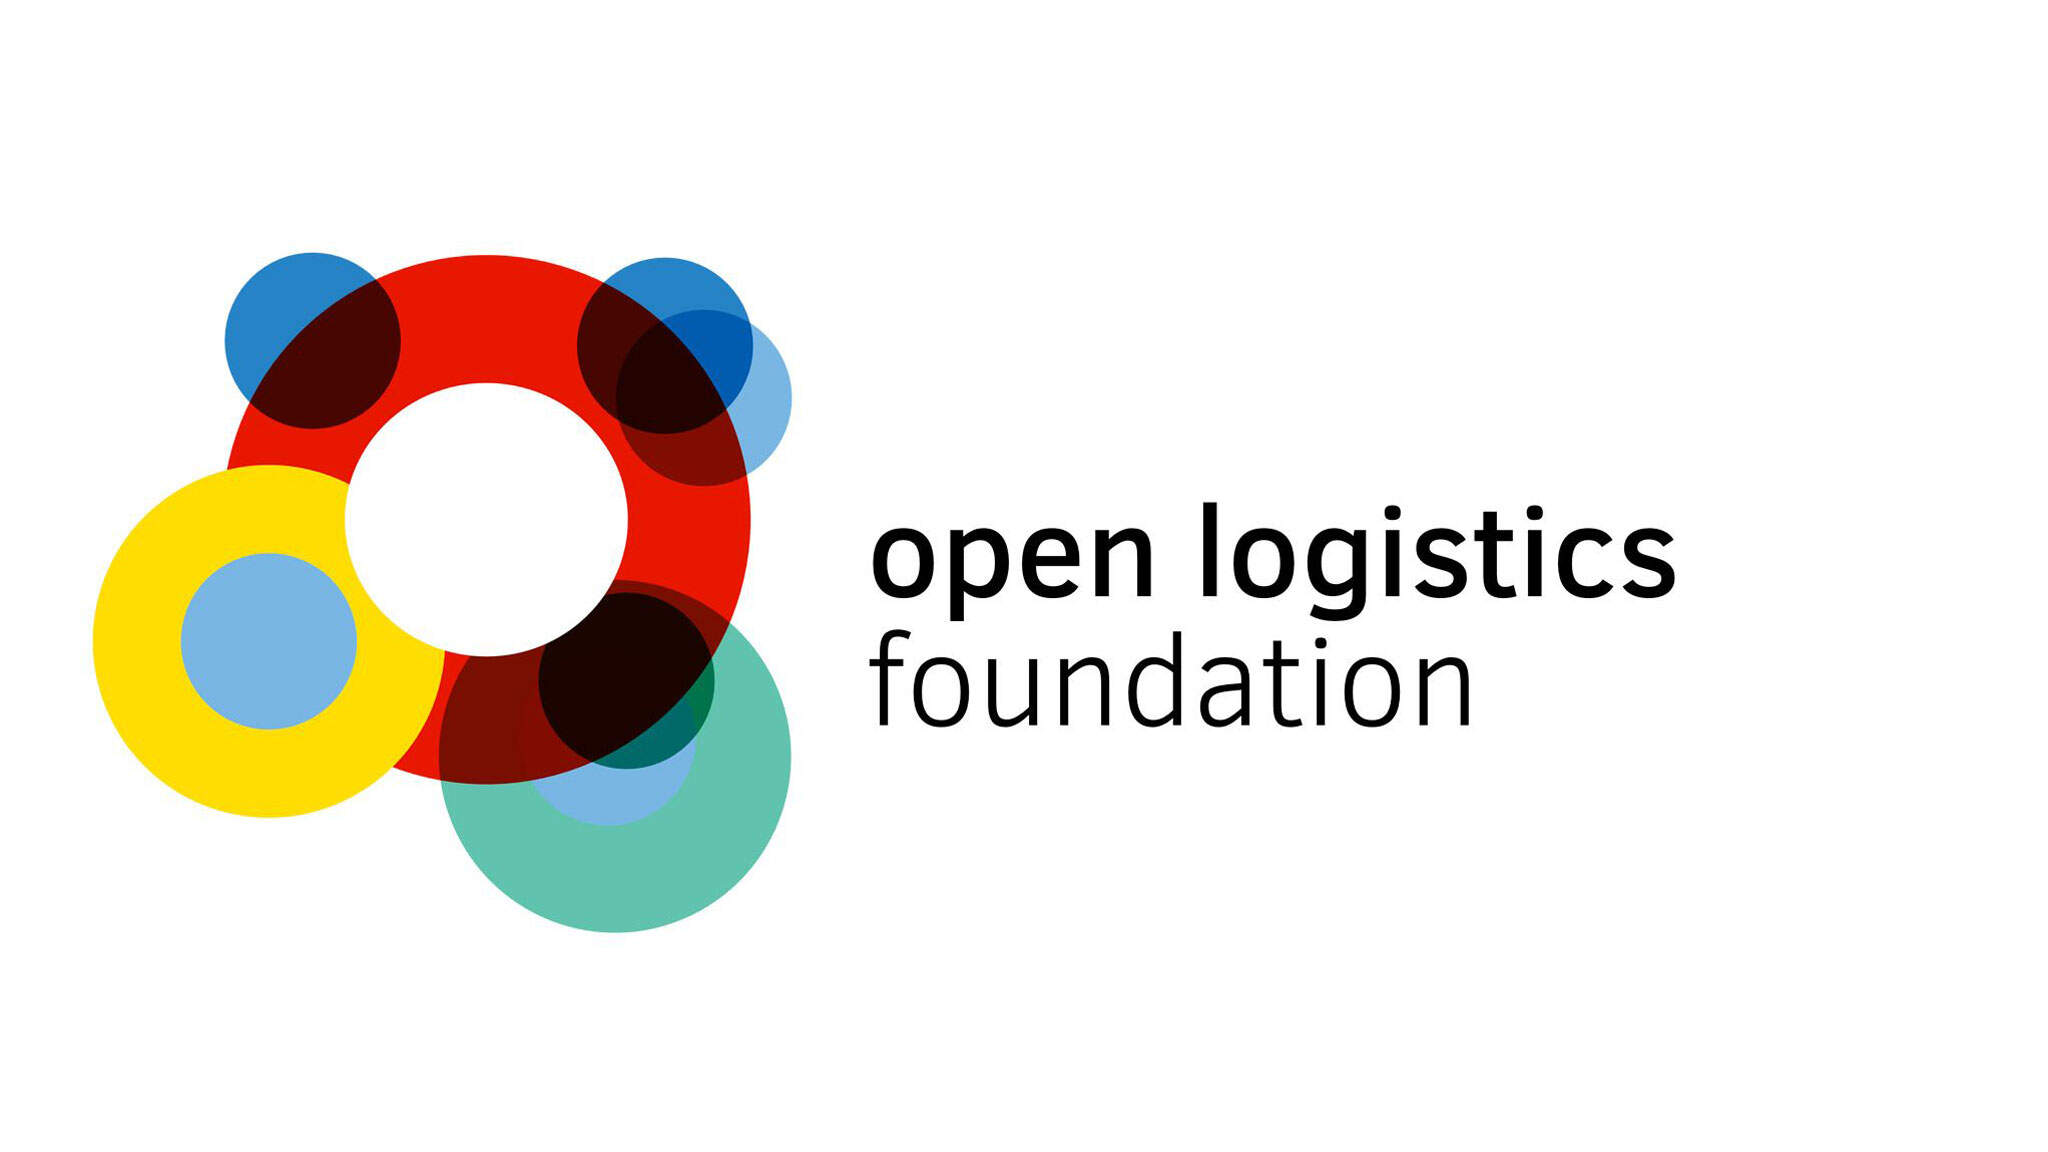 Open Logistics Foundation established